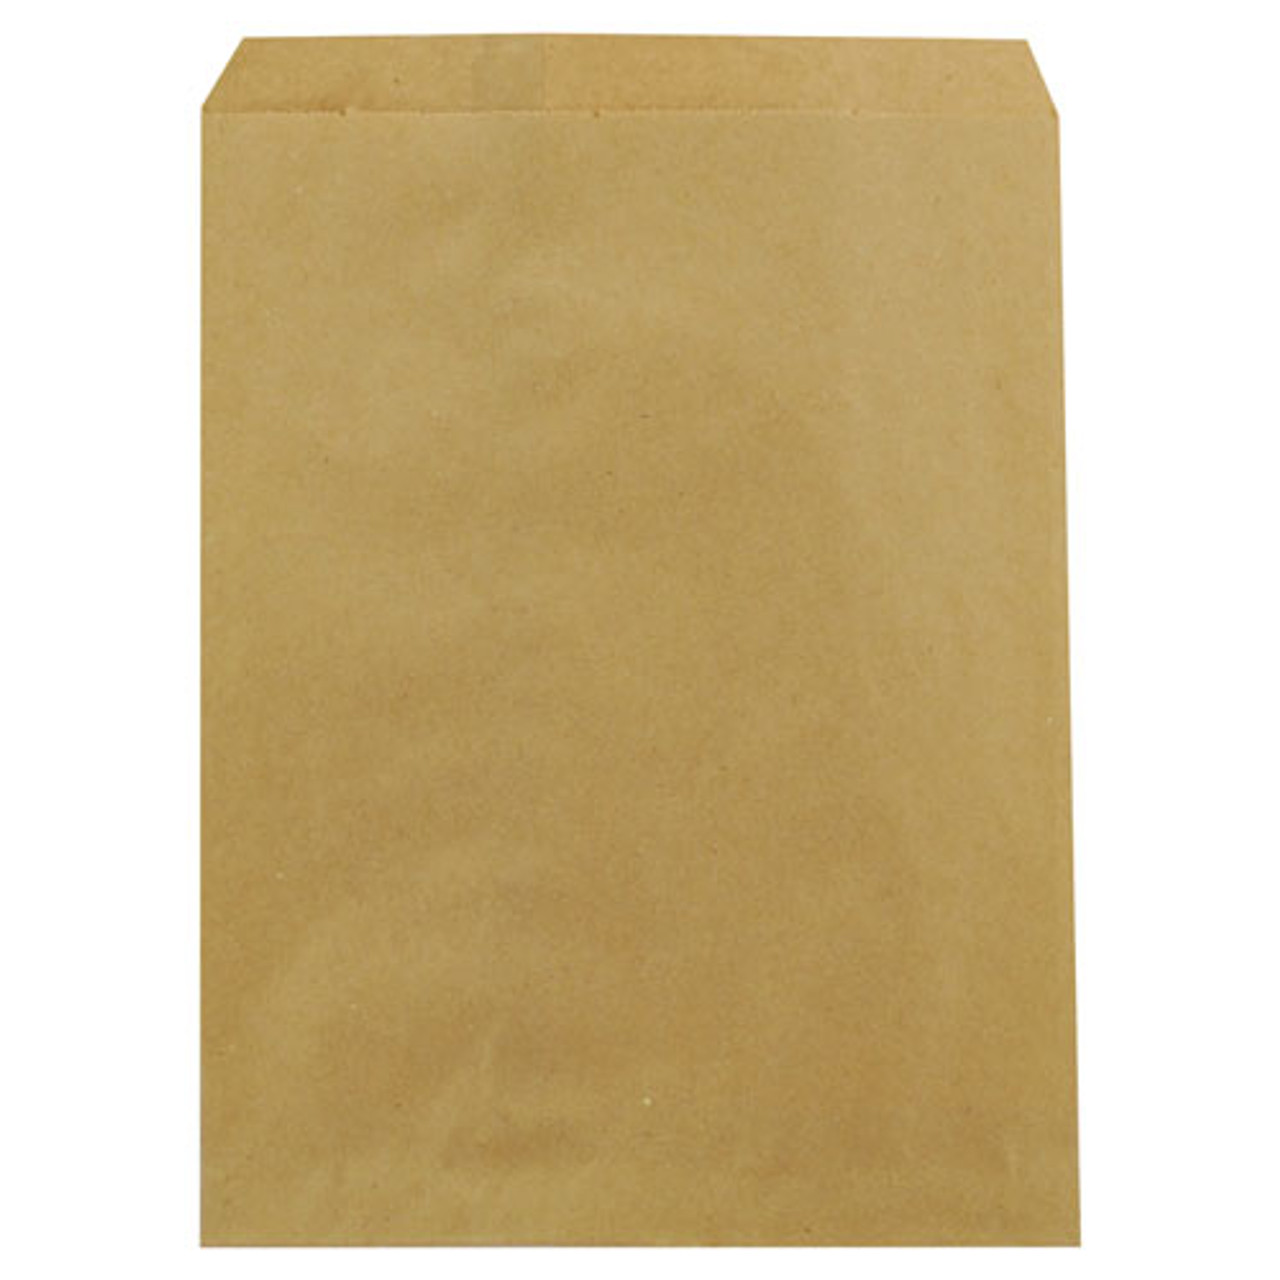 Bagcraft French Fry Bags, 4.5 X 3.5, White, 2,000/carton